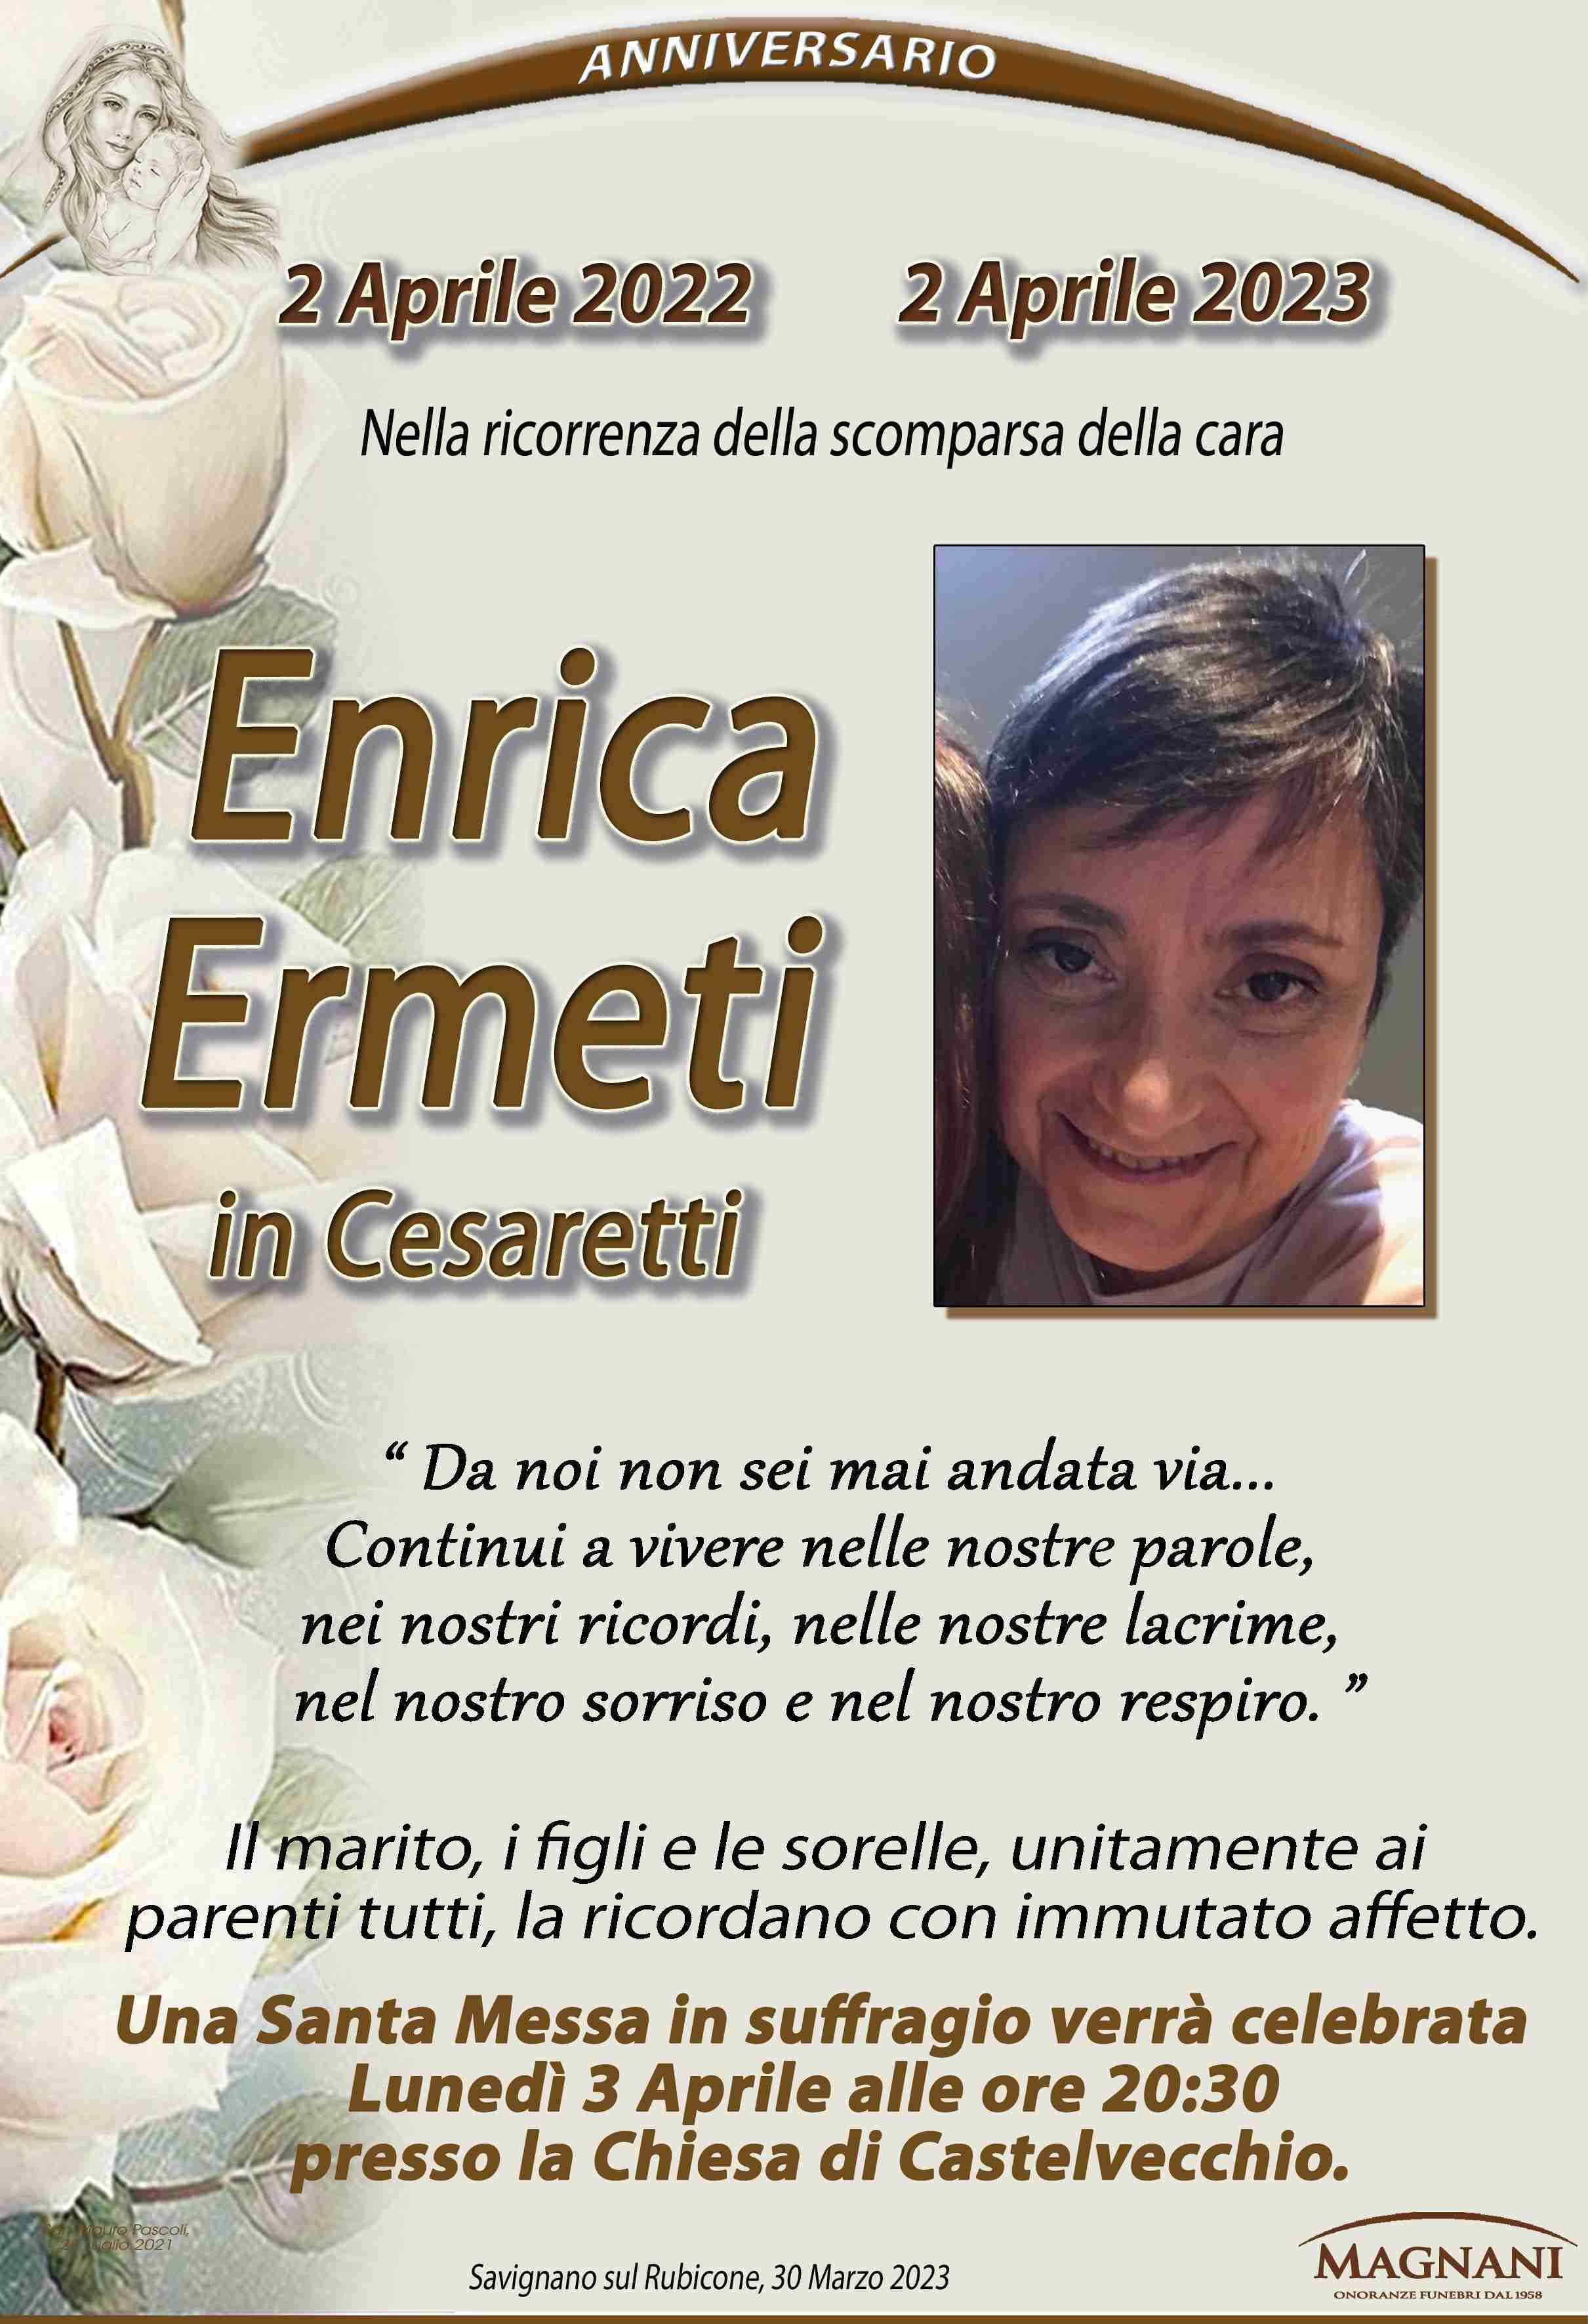 Enrica Ermeti